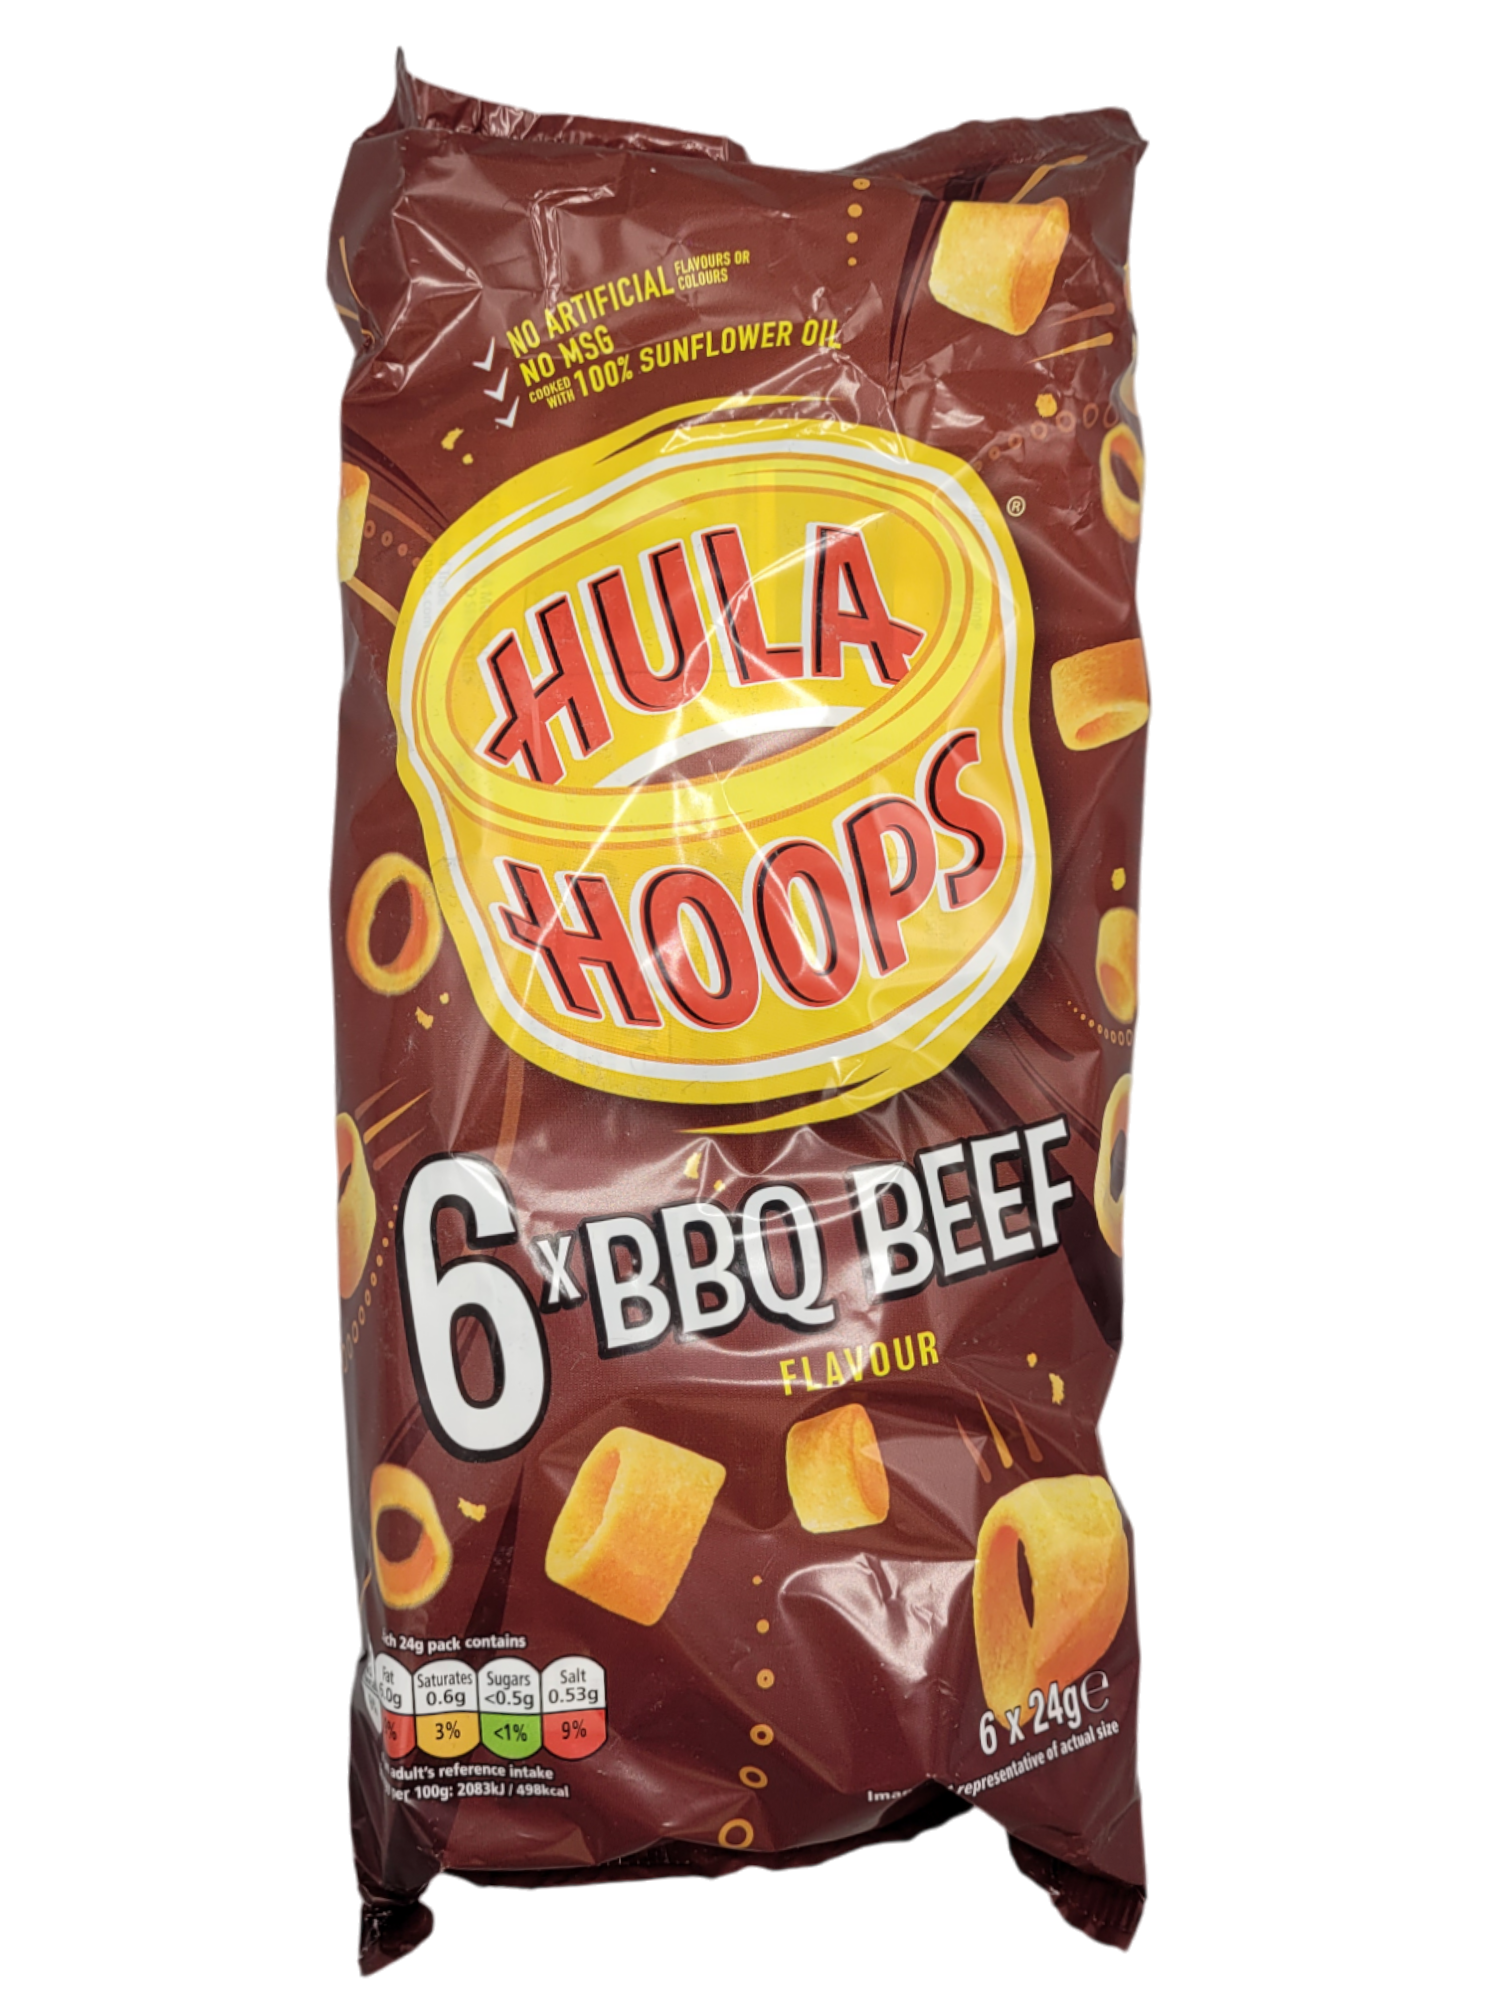 Hula Hoops BBQ Beef 6-pack